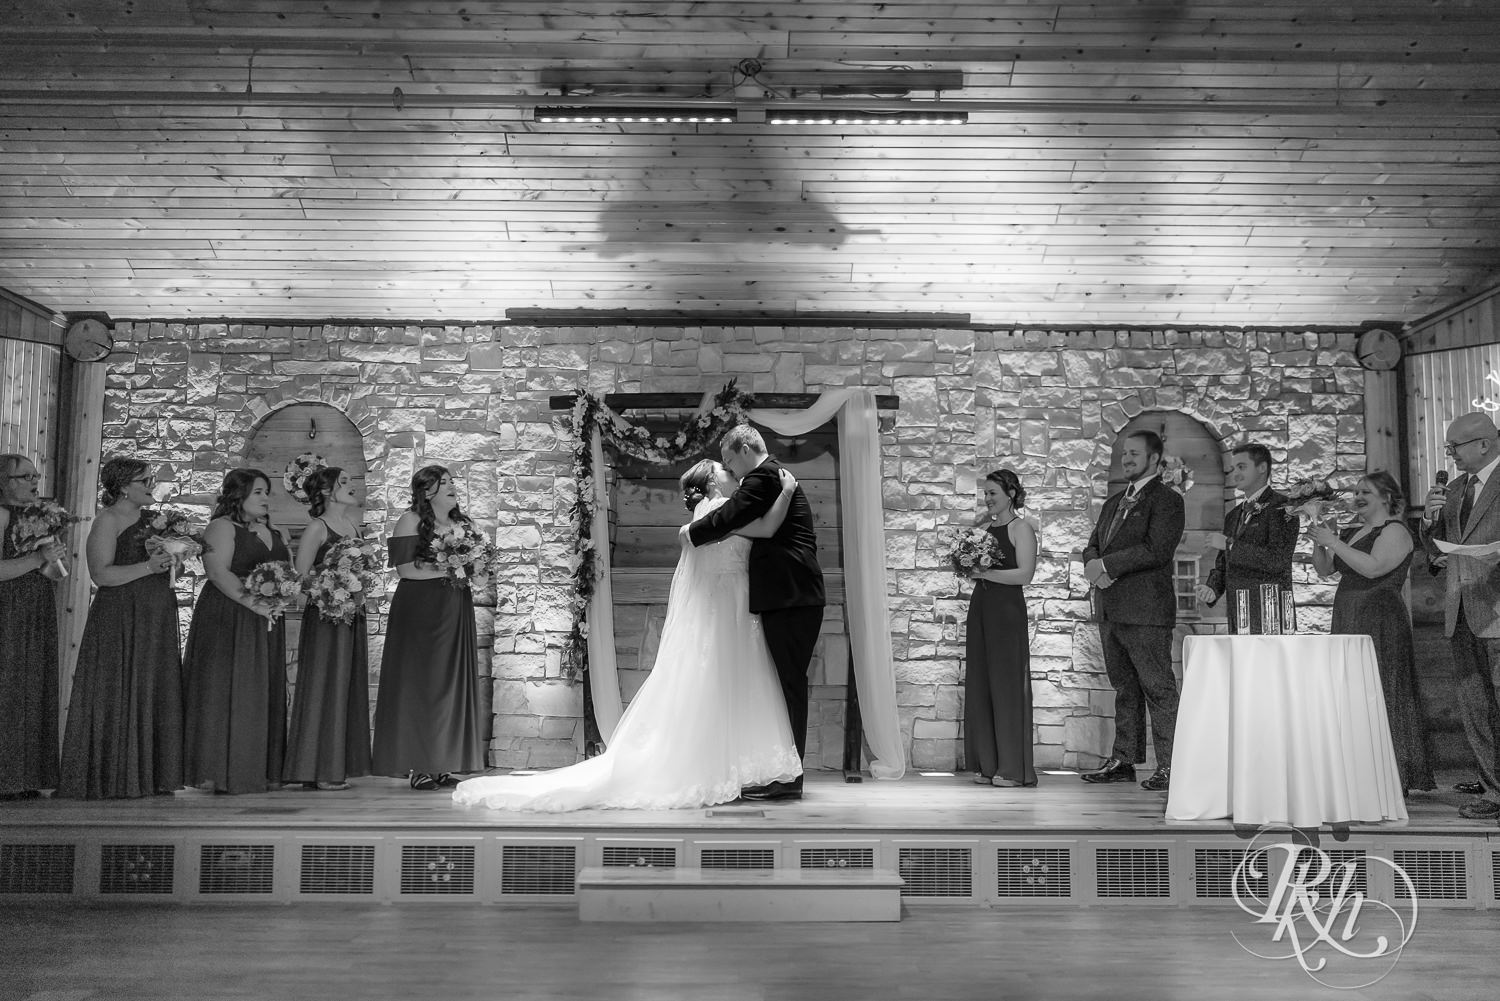 Indoor winter wedding ceremony at Glenhaven Events in Farmington, Minnesota.